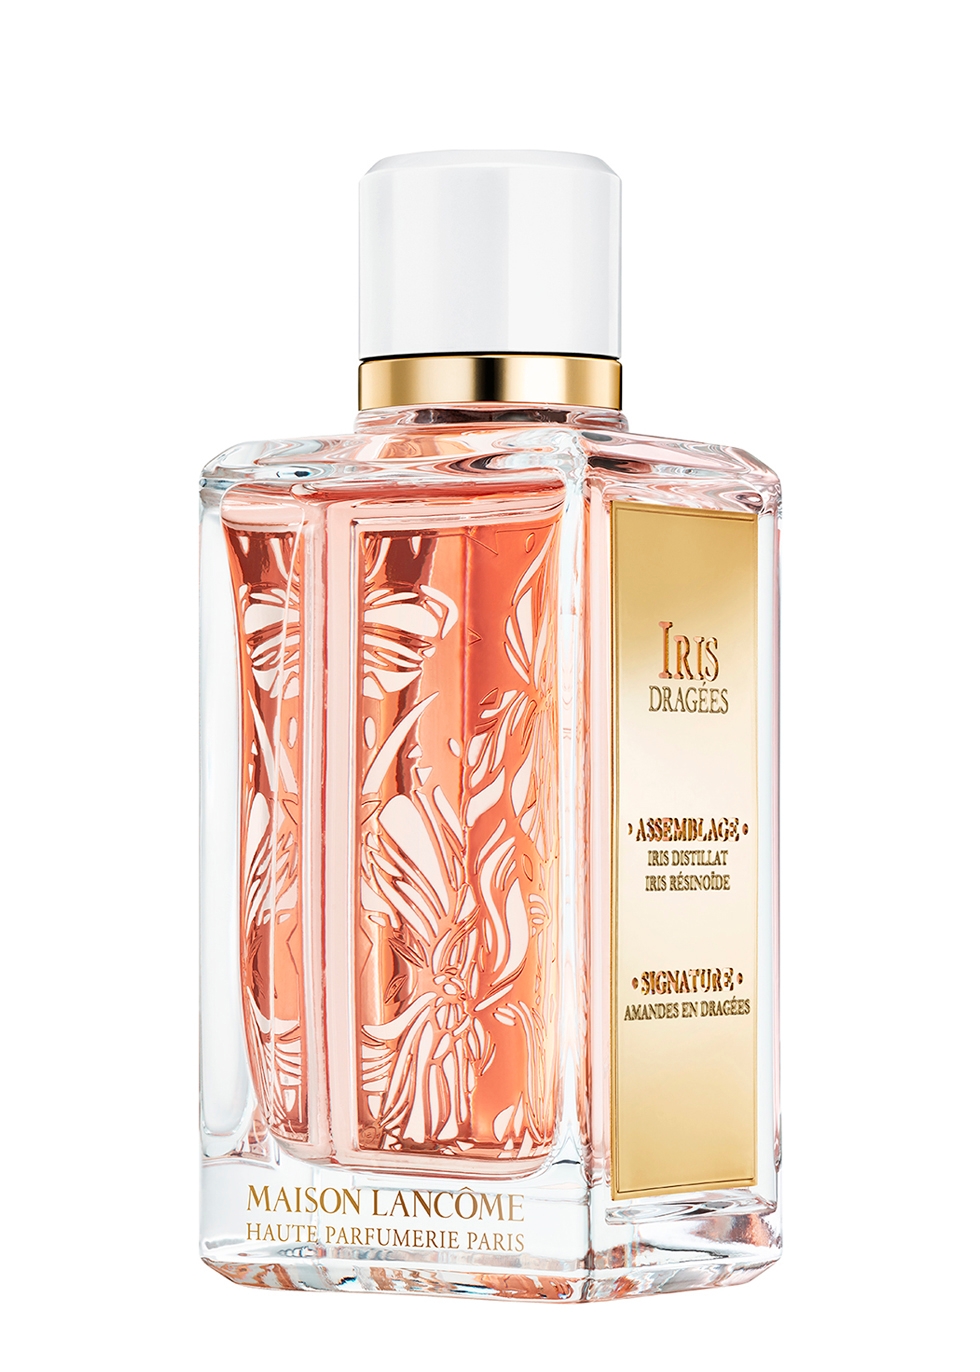 iris dragees perfume